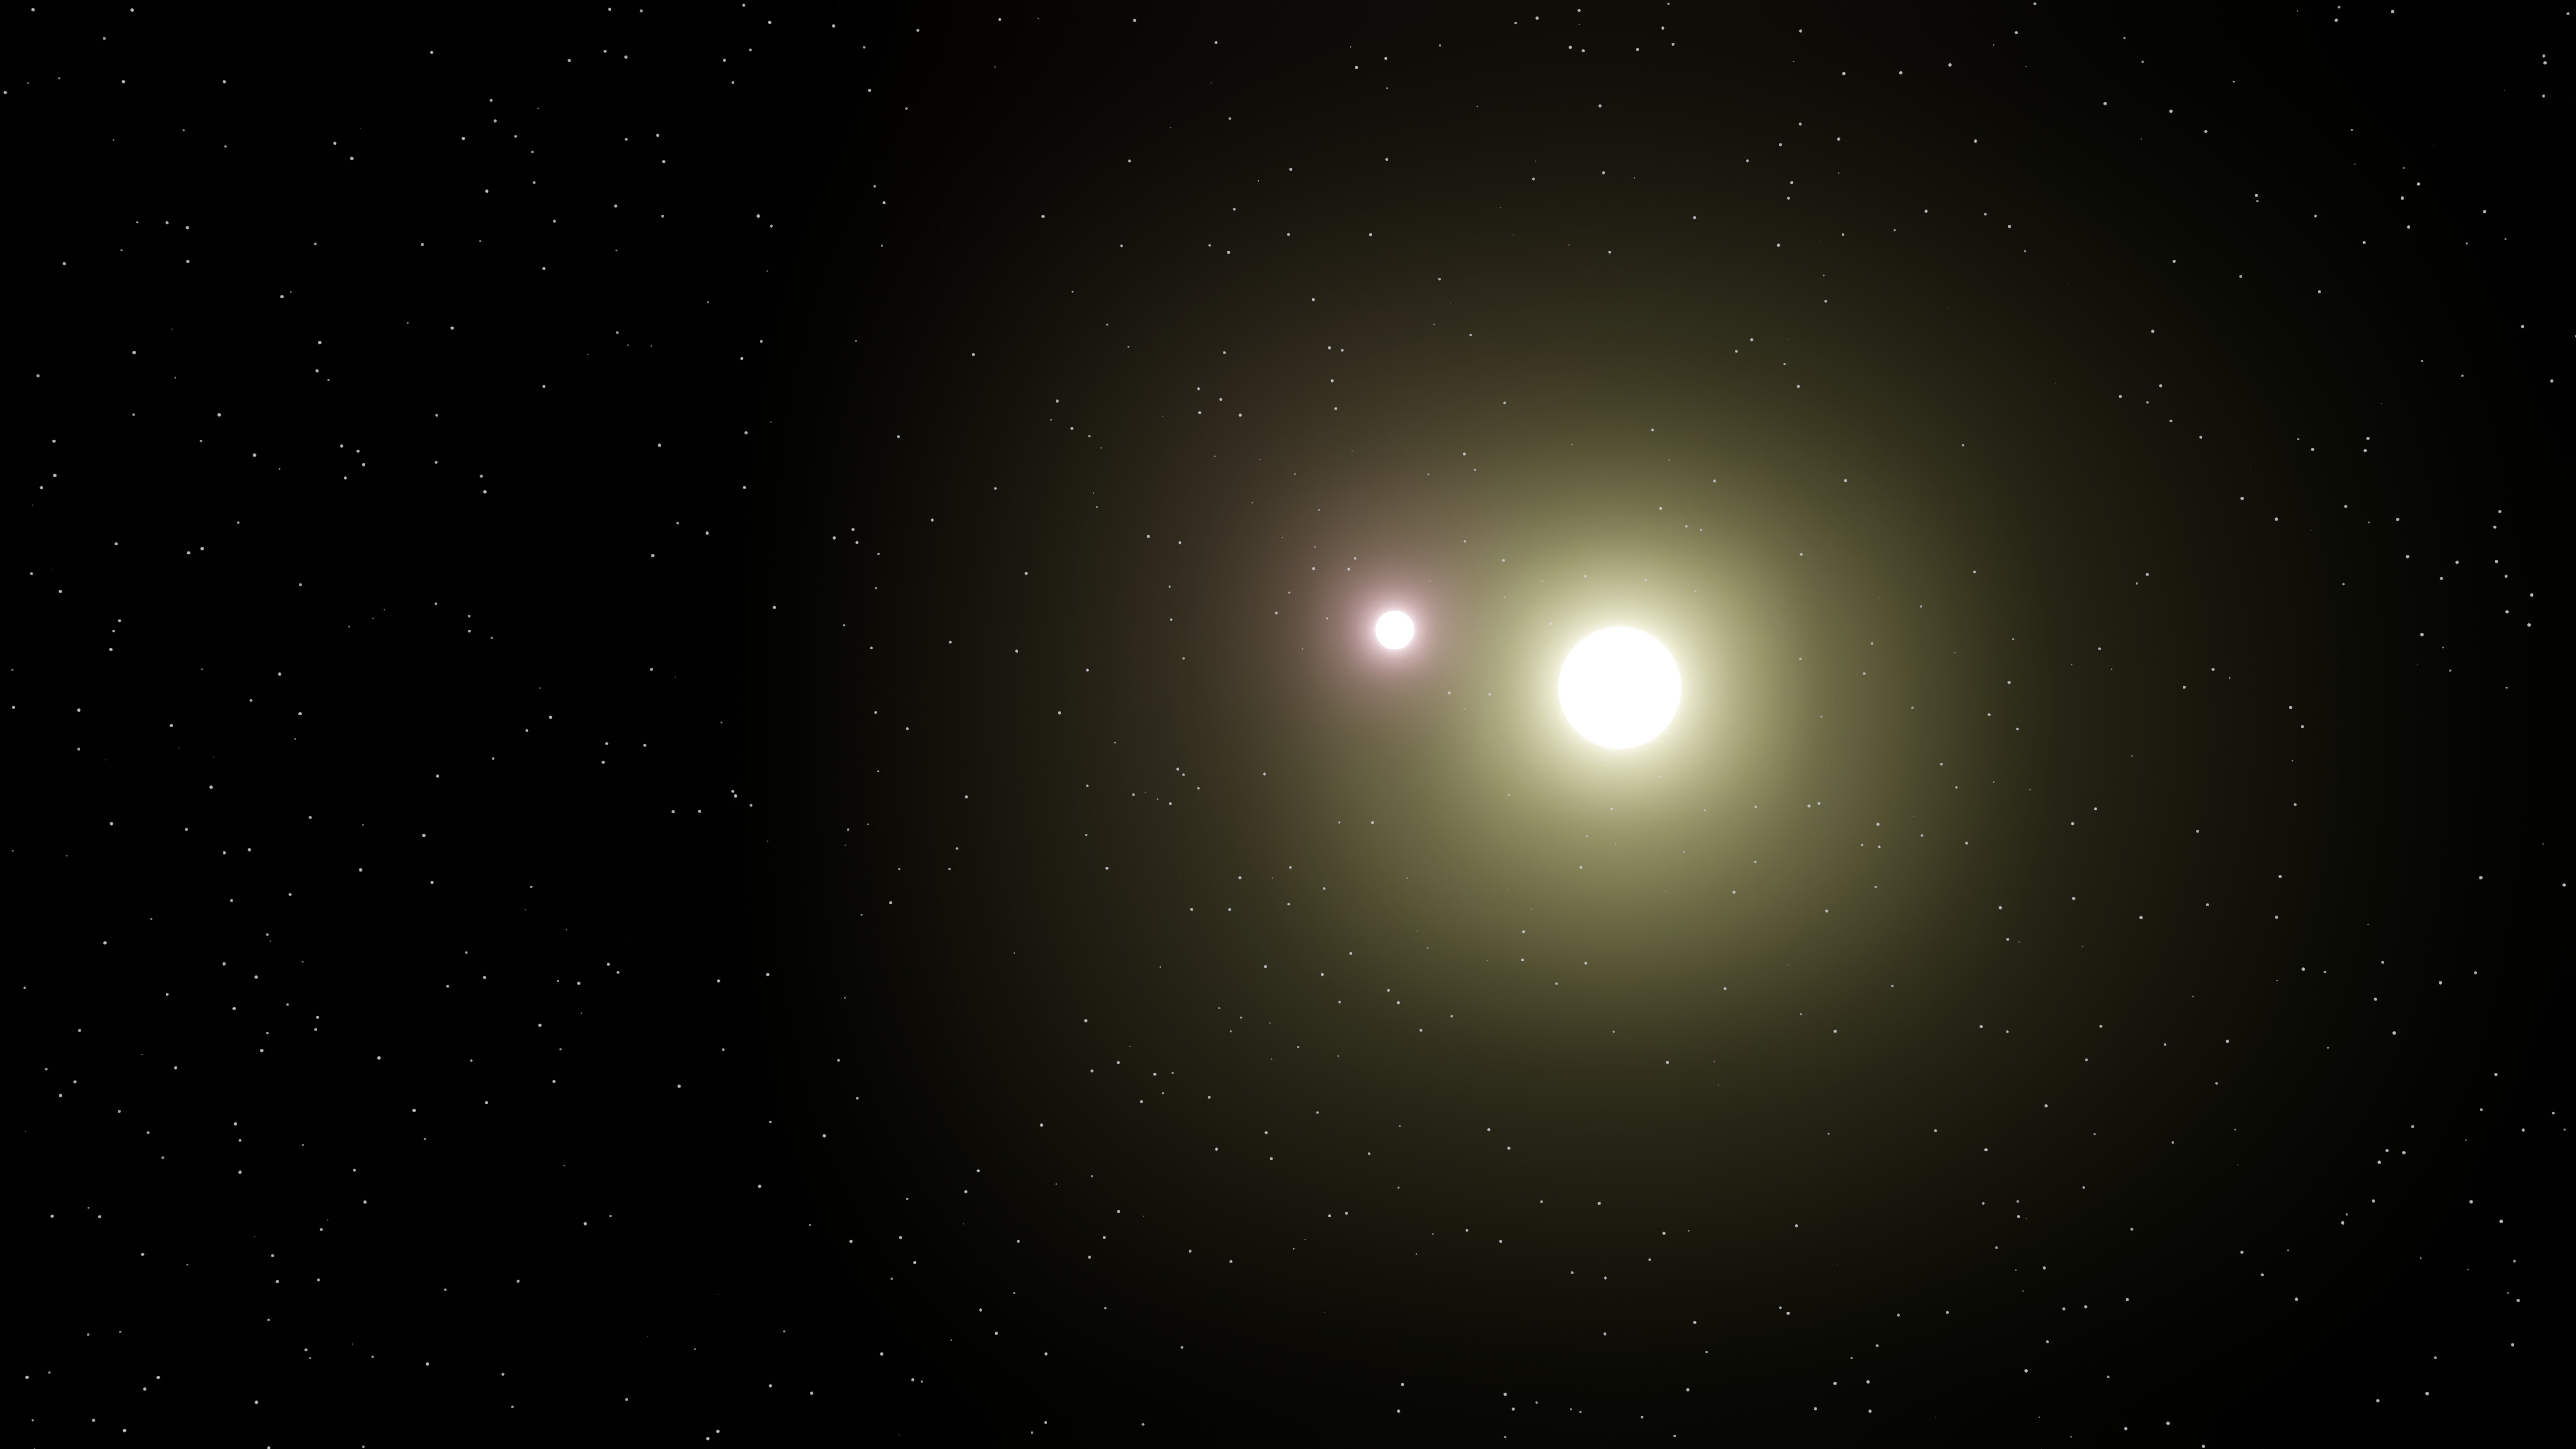 An artist’s impression of a binary star system